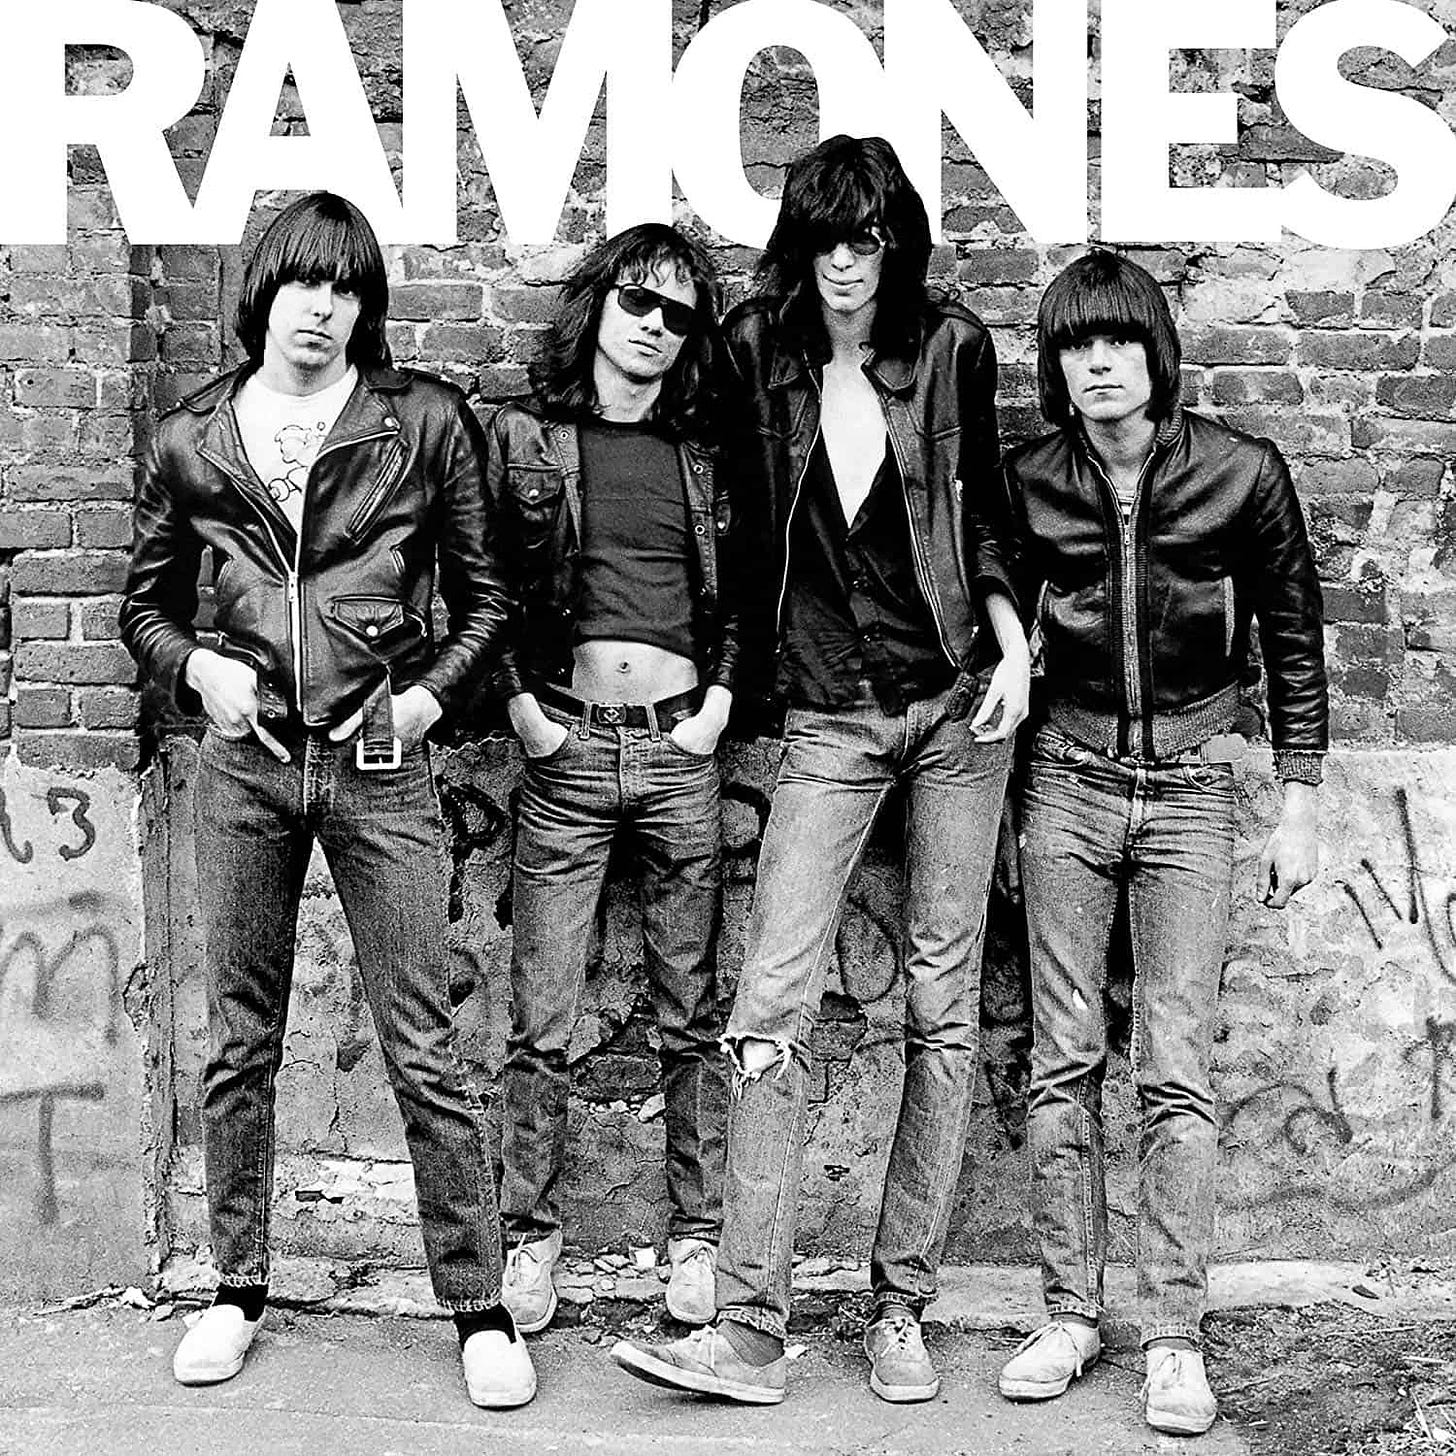 Vinyl Reviews - Ramones - Ramones